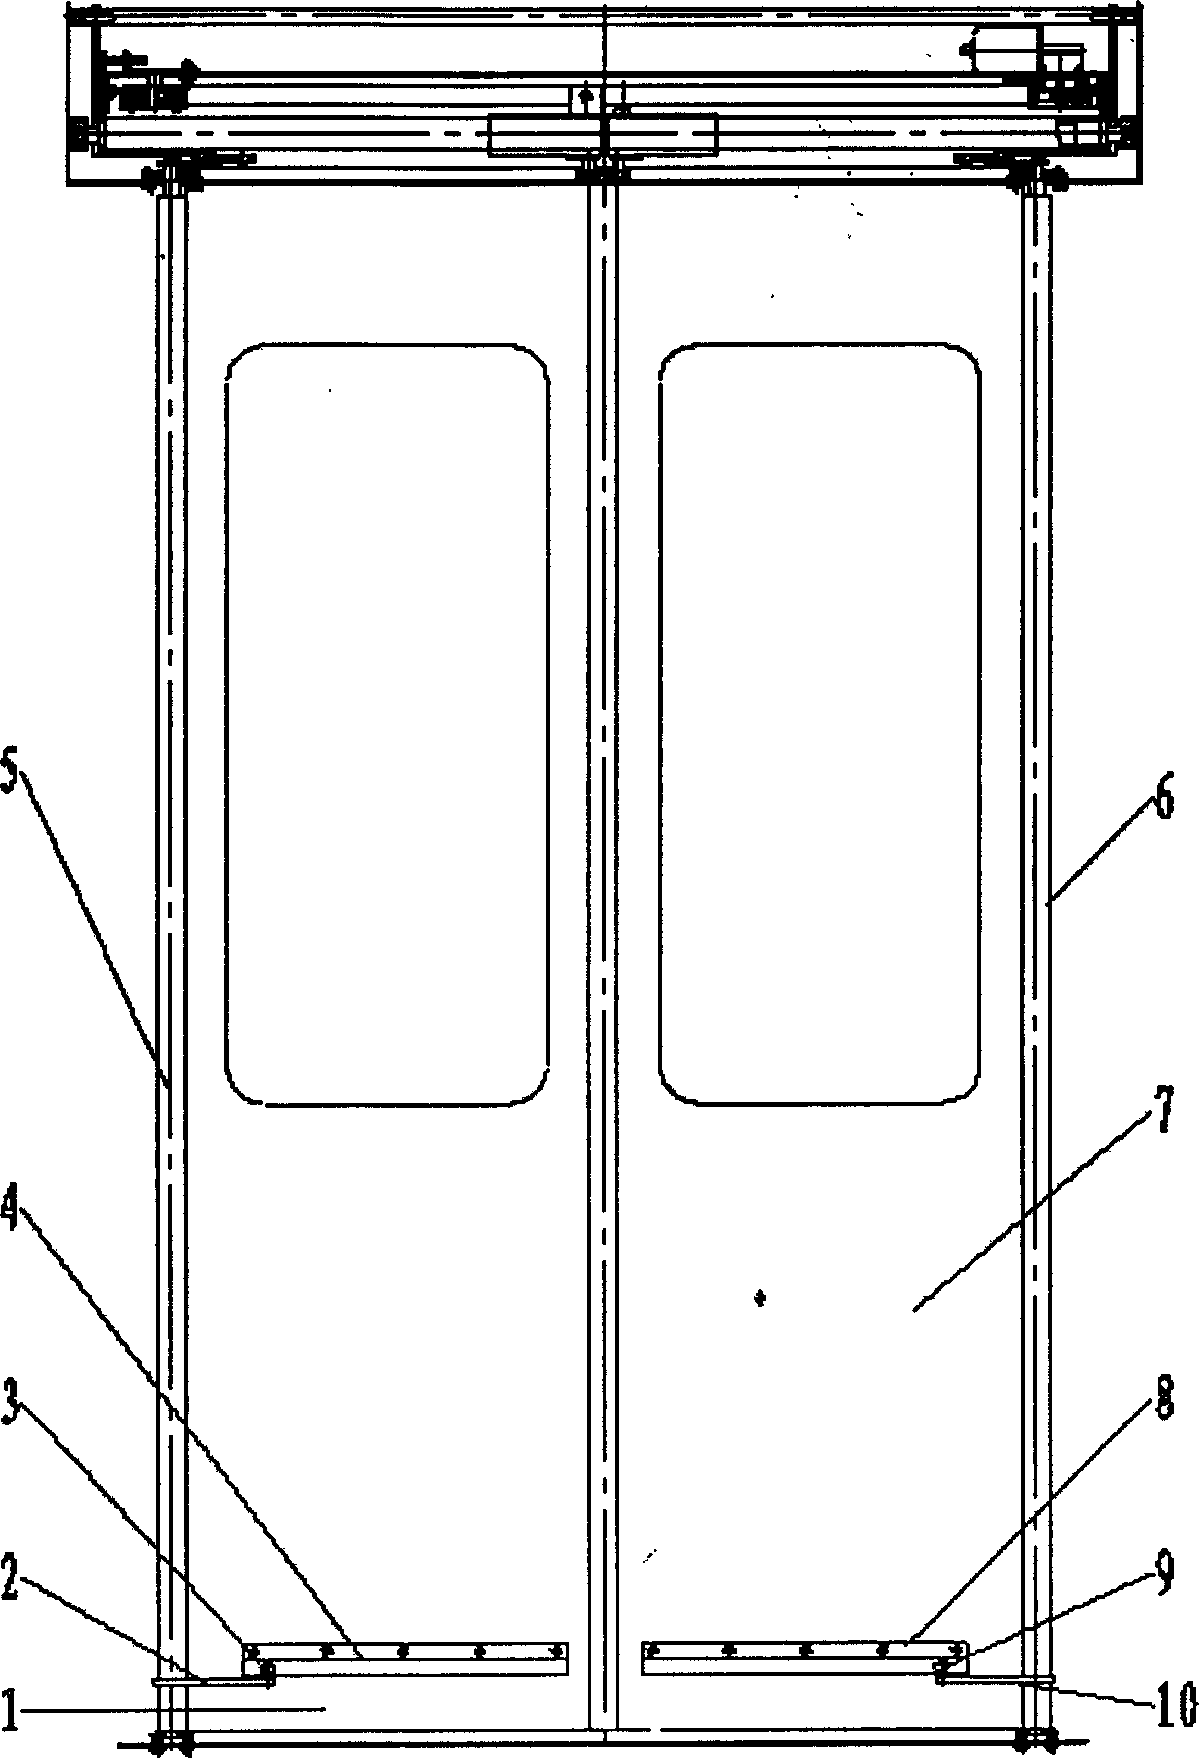 Door mechanism system for passenger car